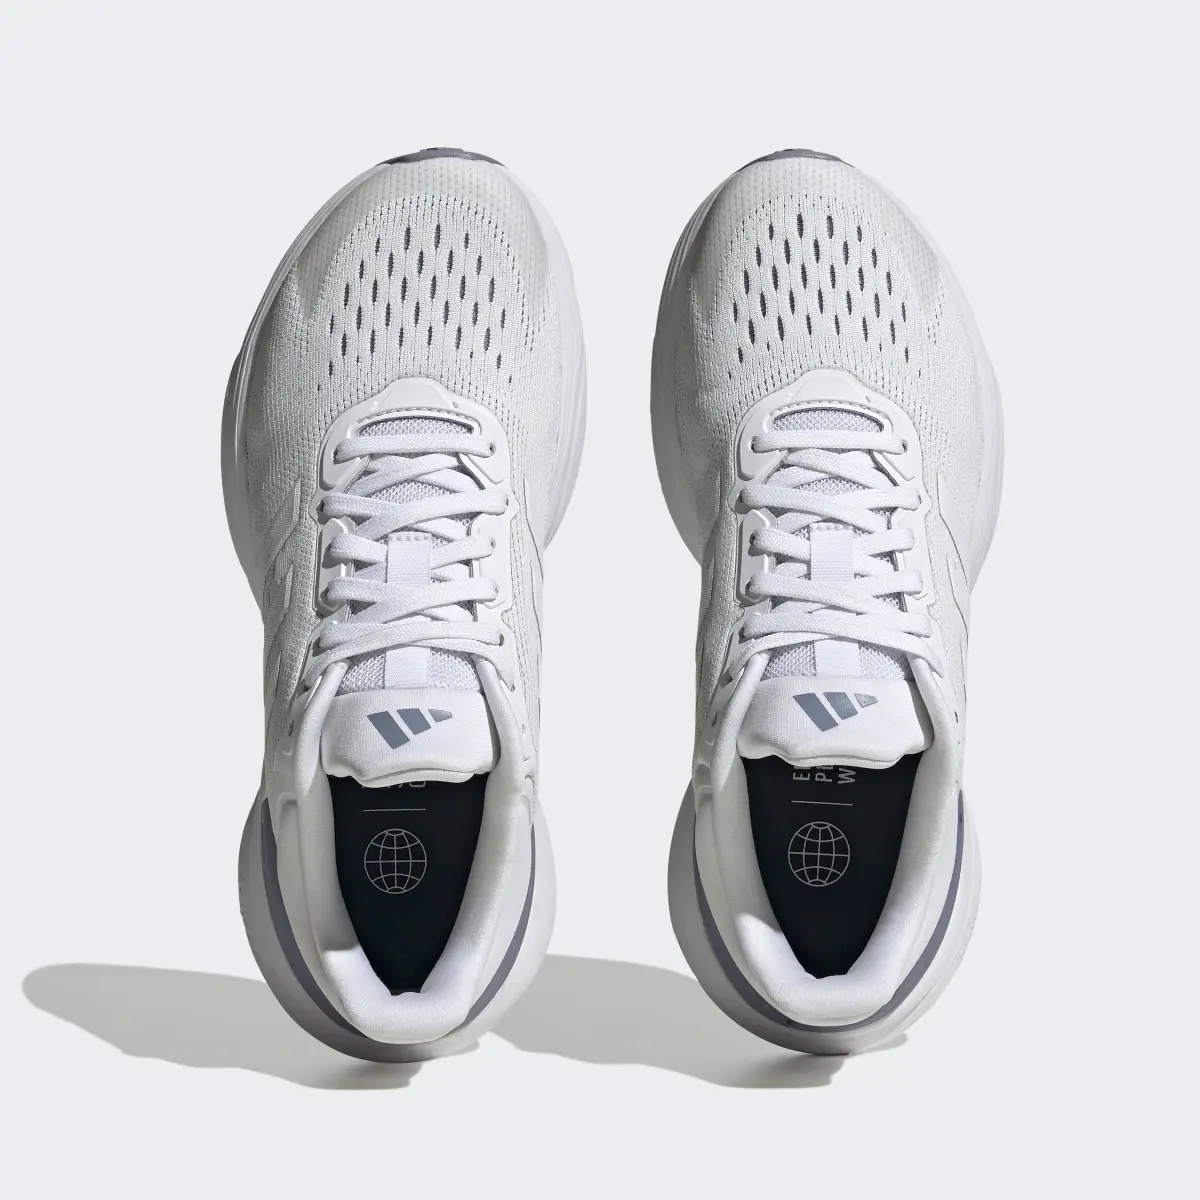 Adidas Response Super 3.0 Shoes. 3